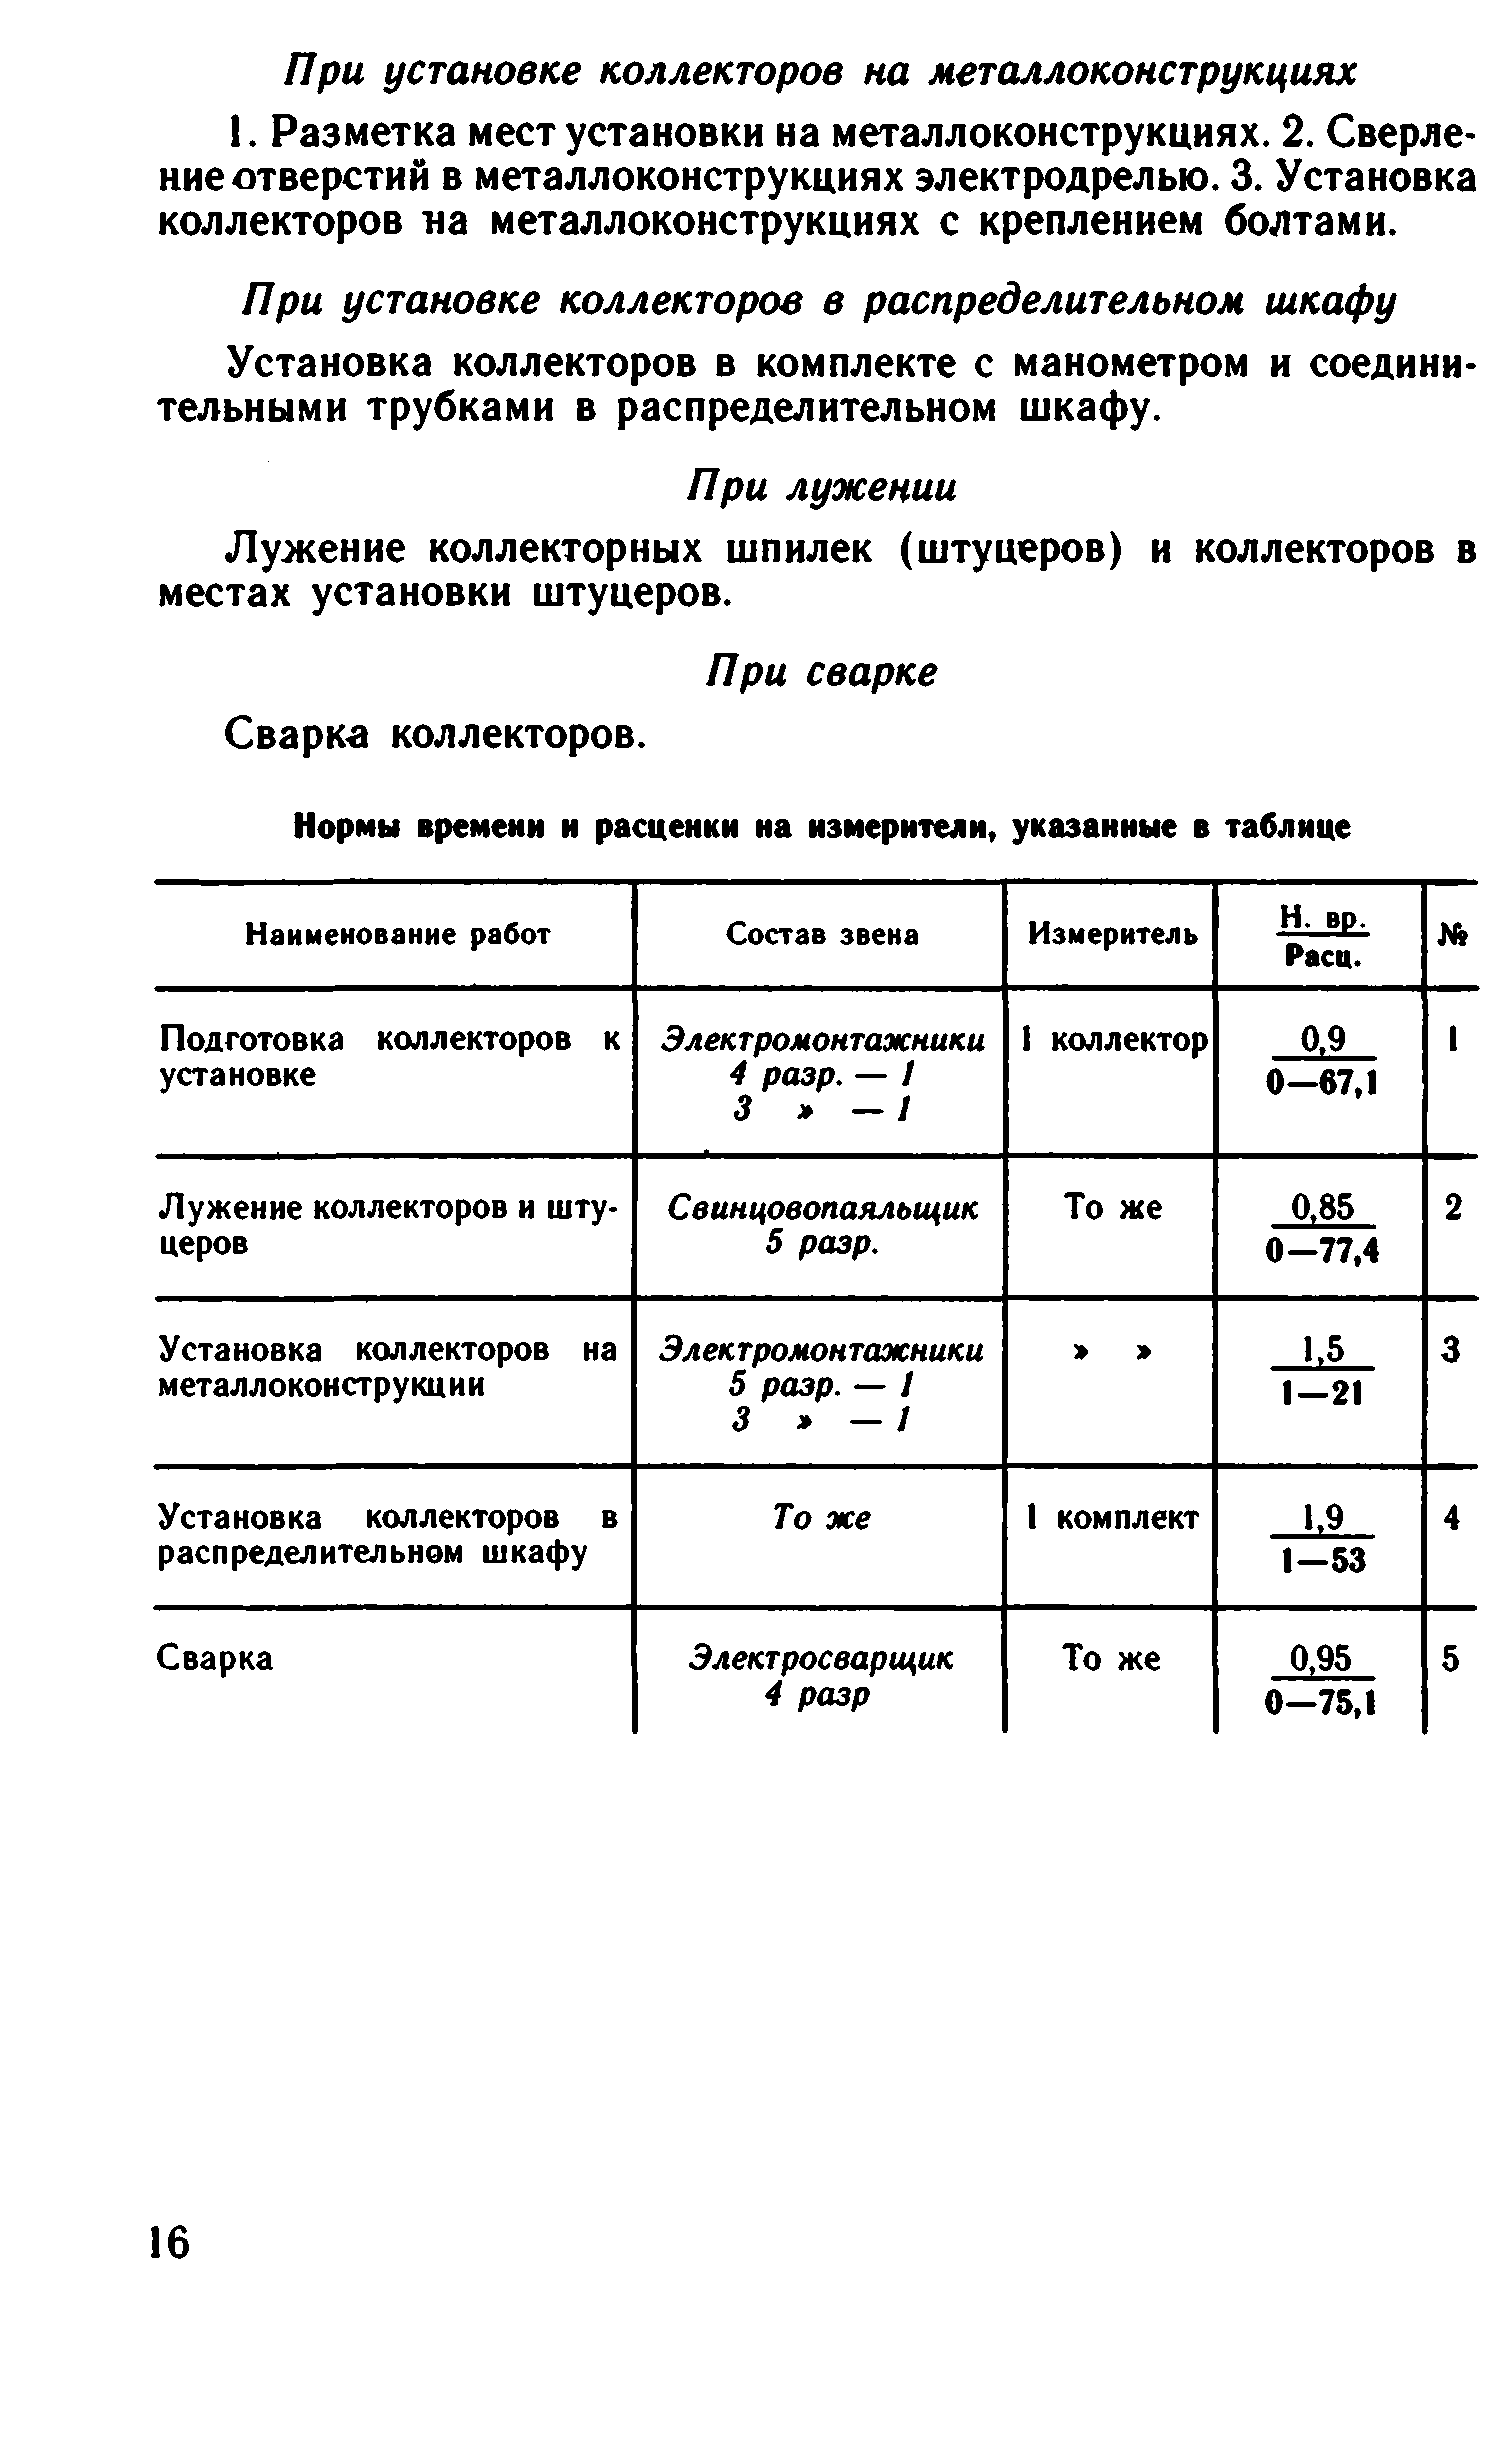 ВНиР В17-9